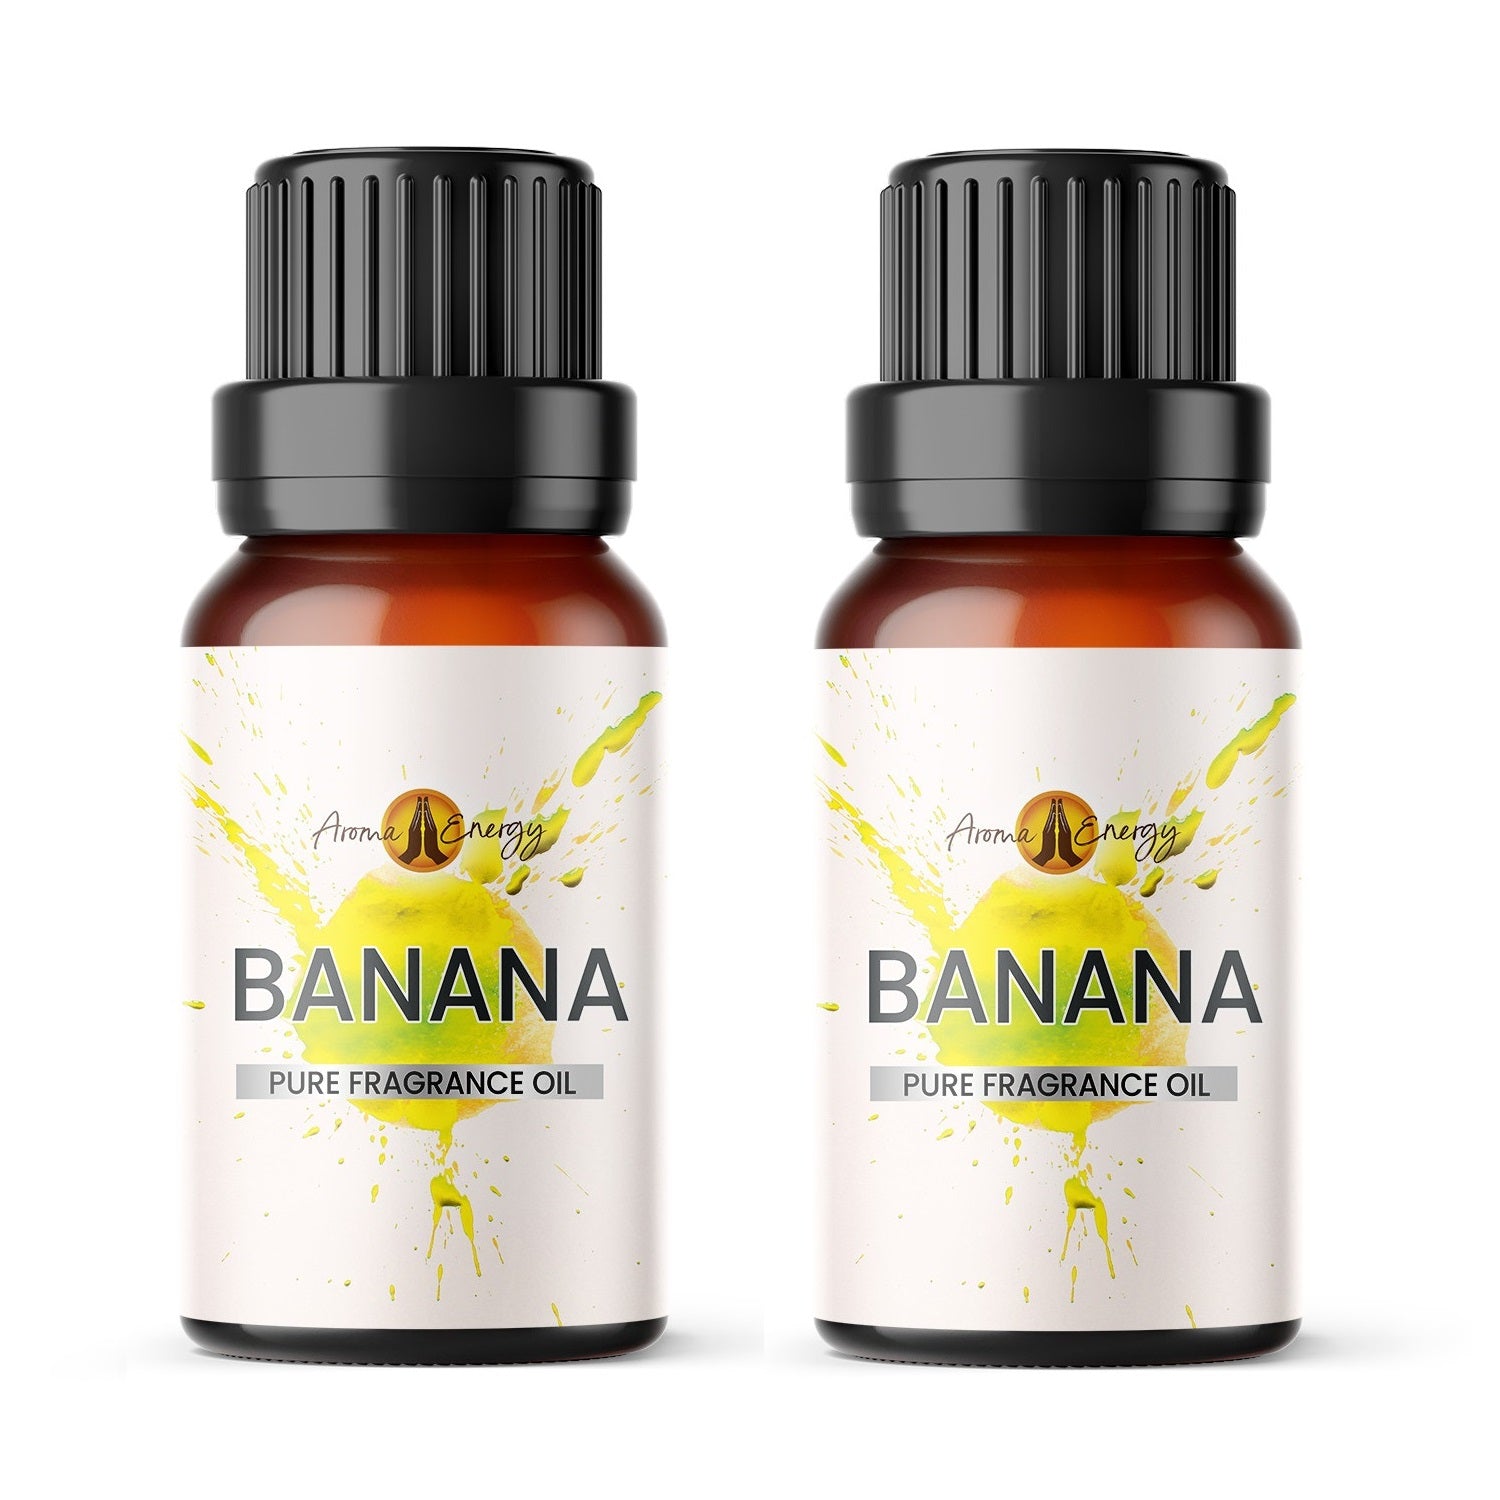 Banana Fragrance Oil - Aroma Energy